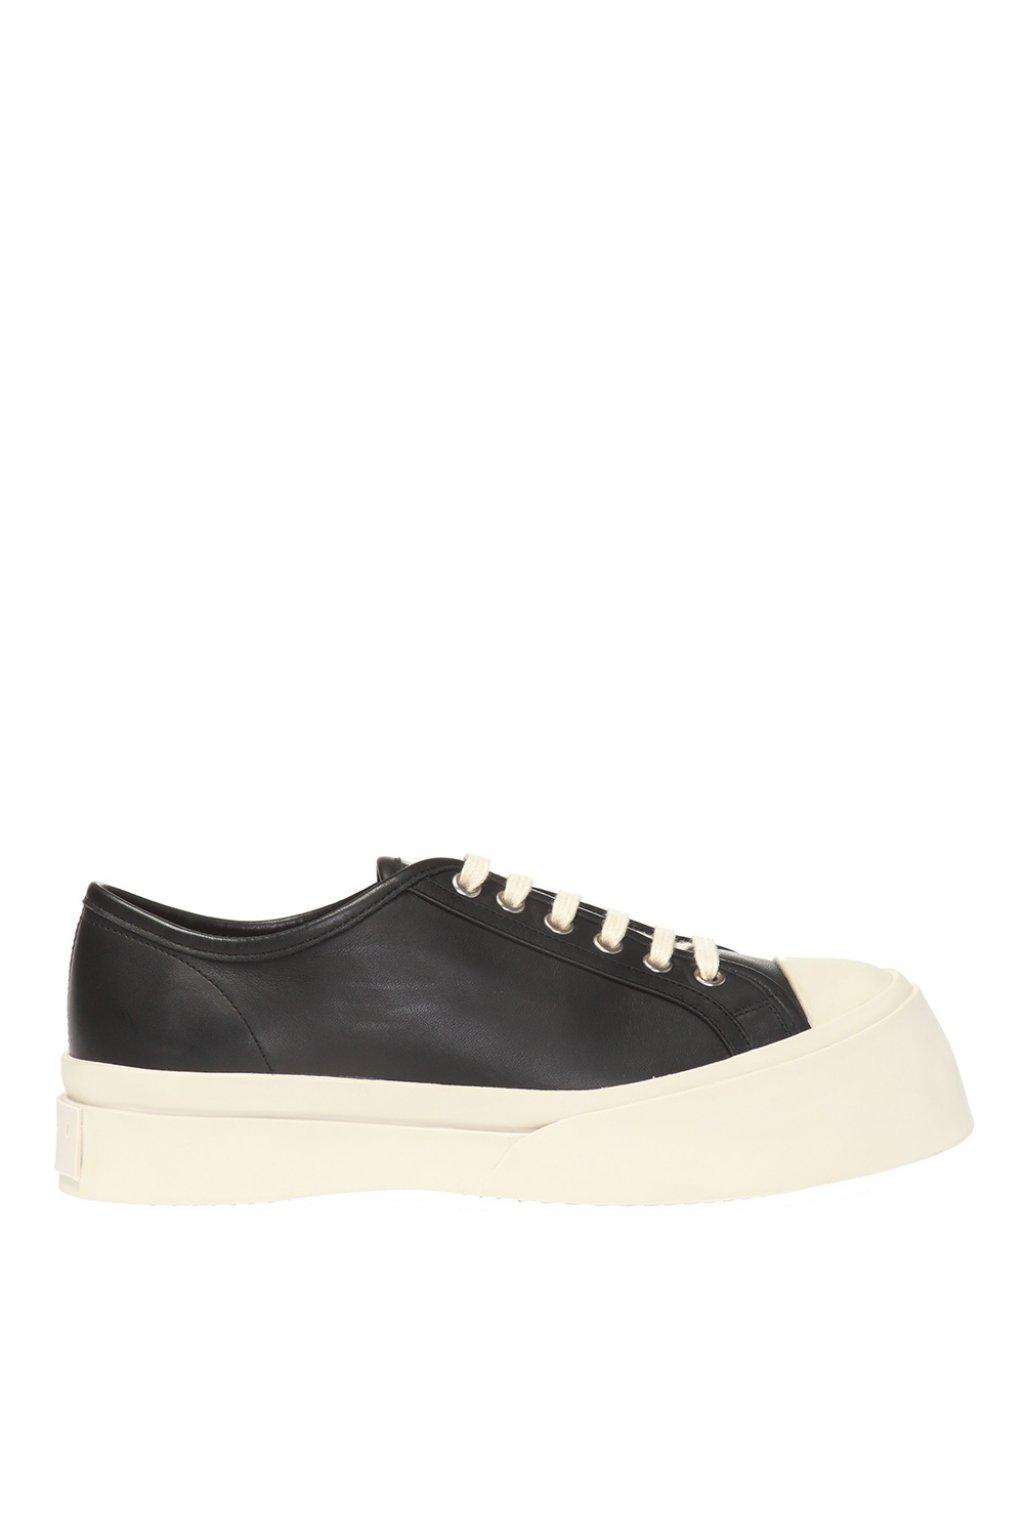 Marni Leather 'pablo' Platform Sneakers in Black White (Black) - Lyst